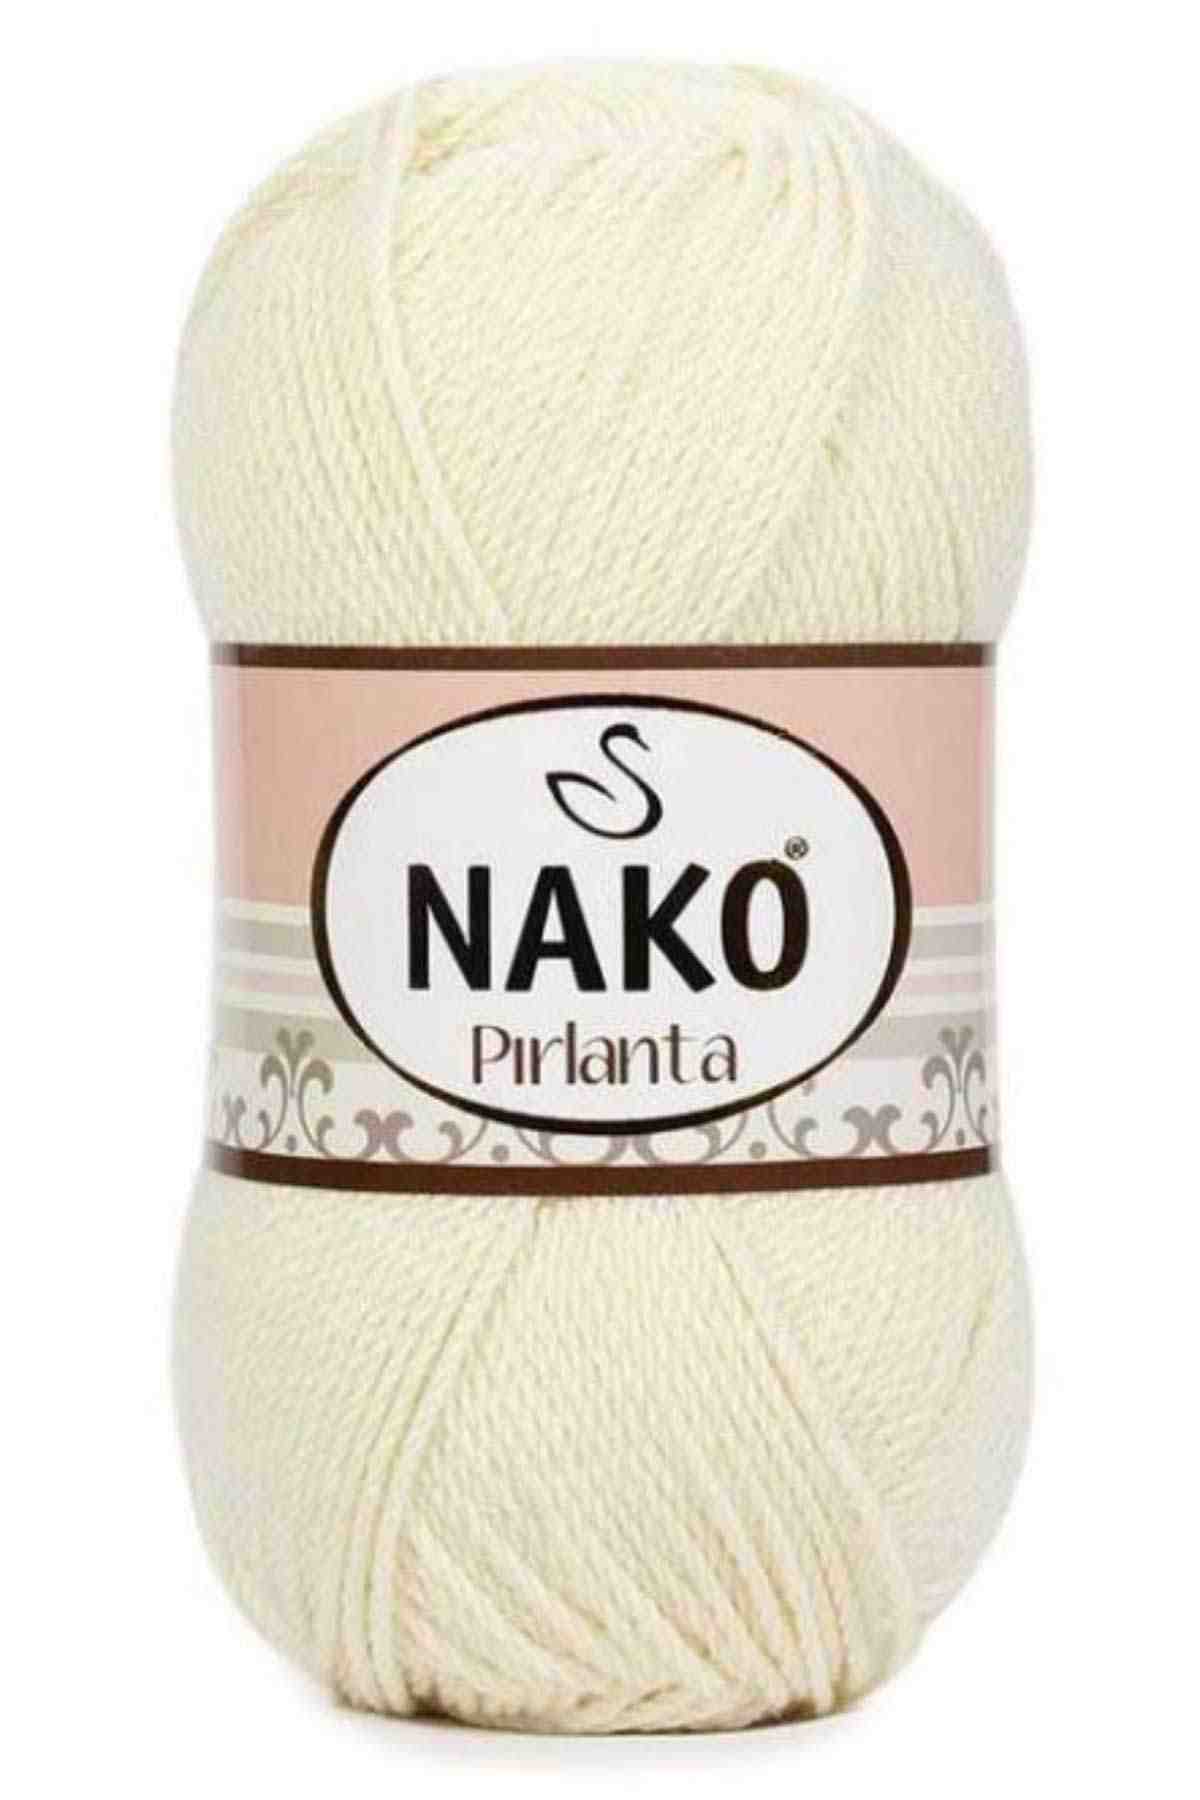 Nako Pırlanta Acrylic Yarn